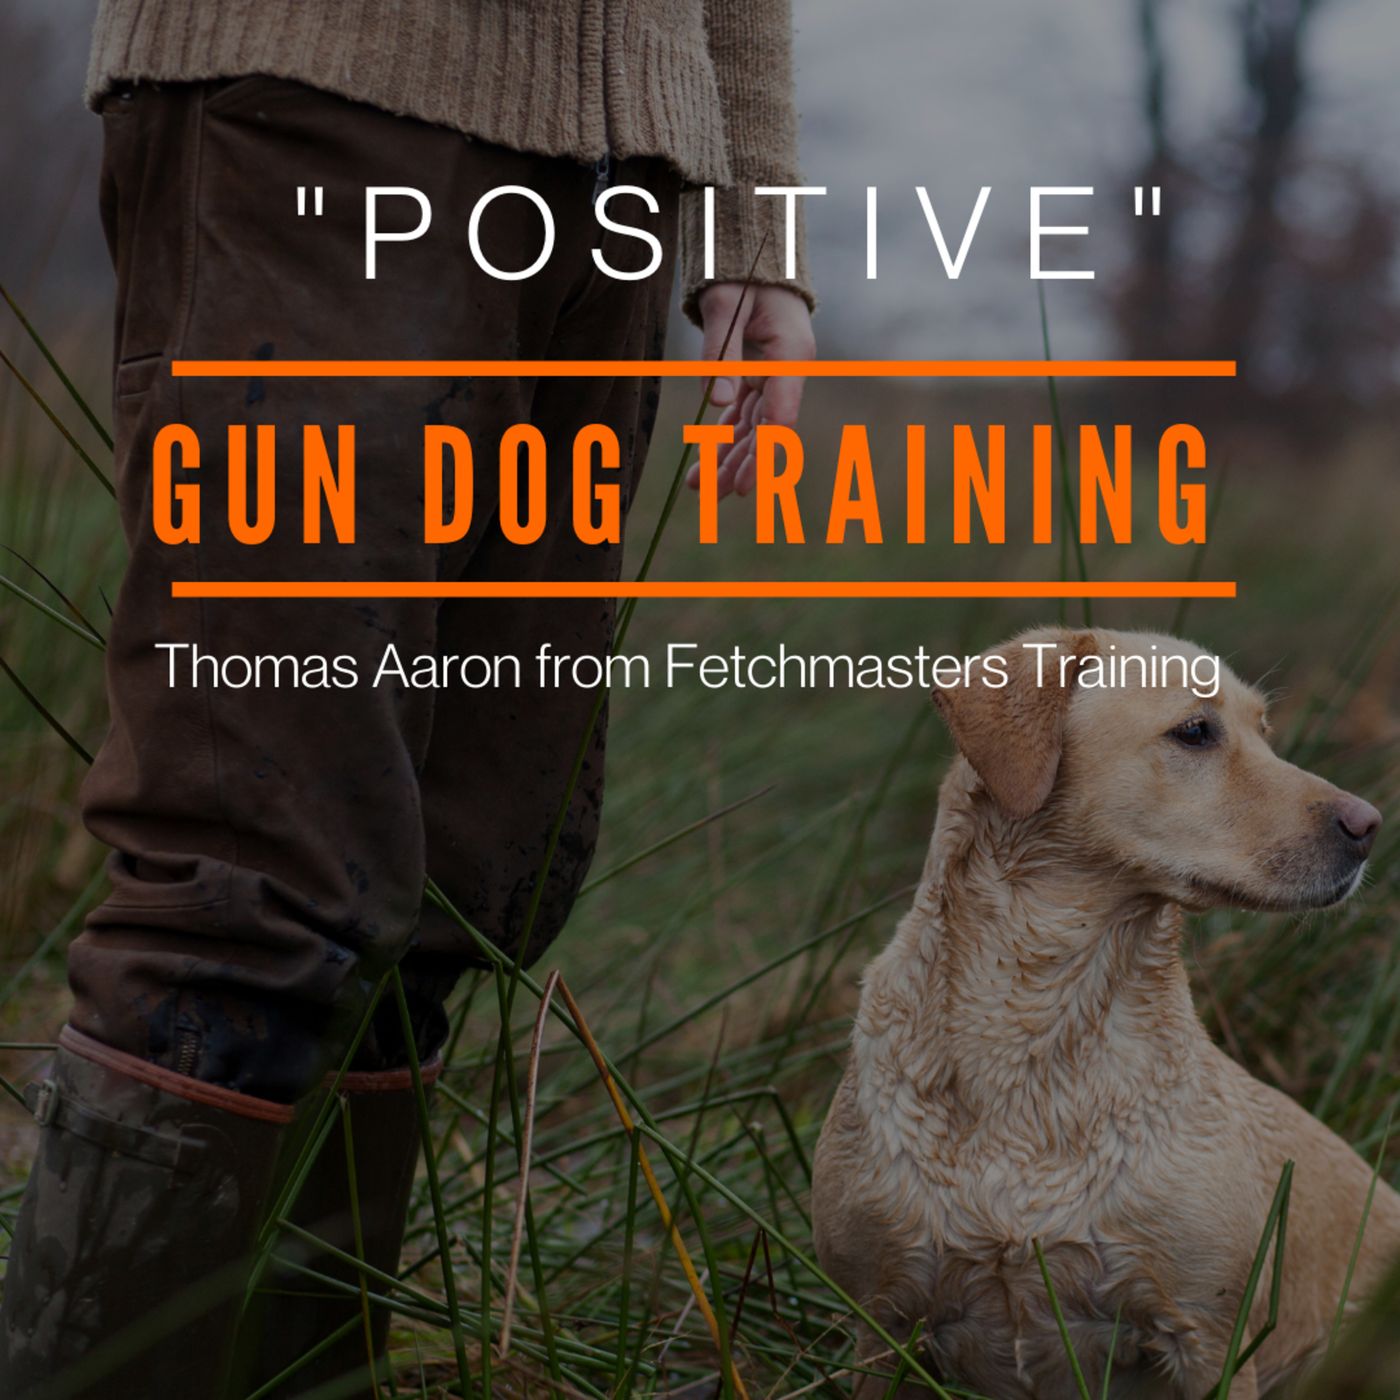 "Positive" Gun Dog Training